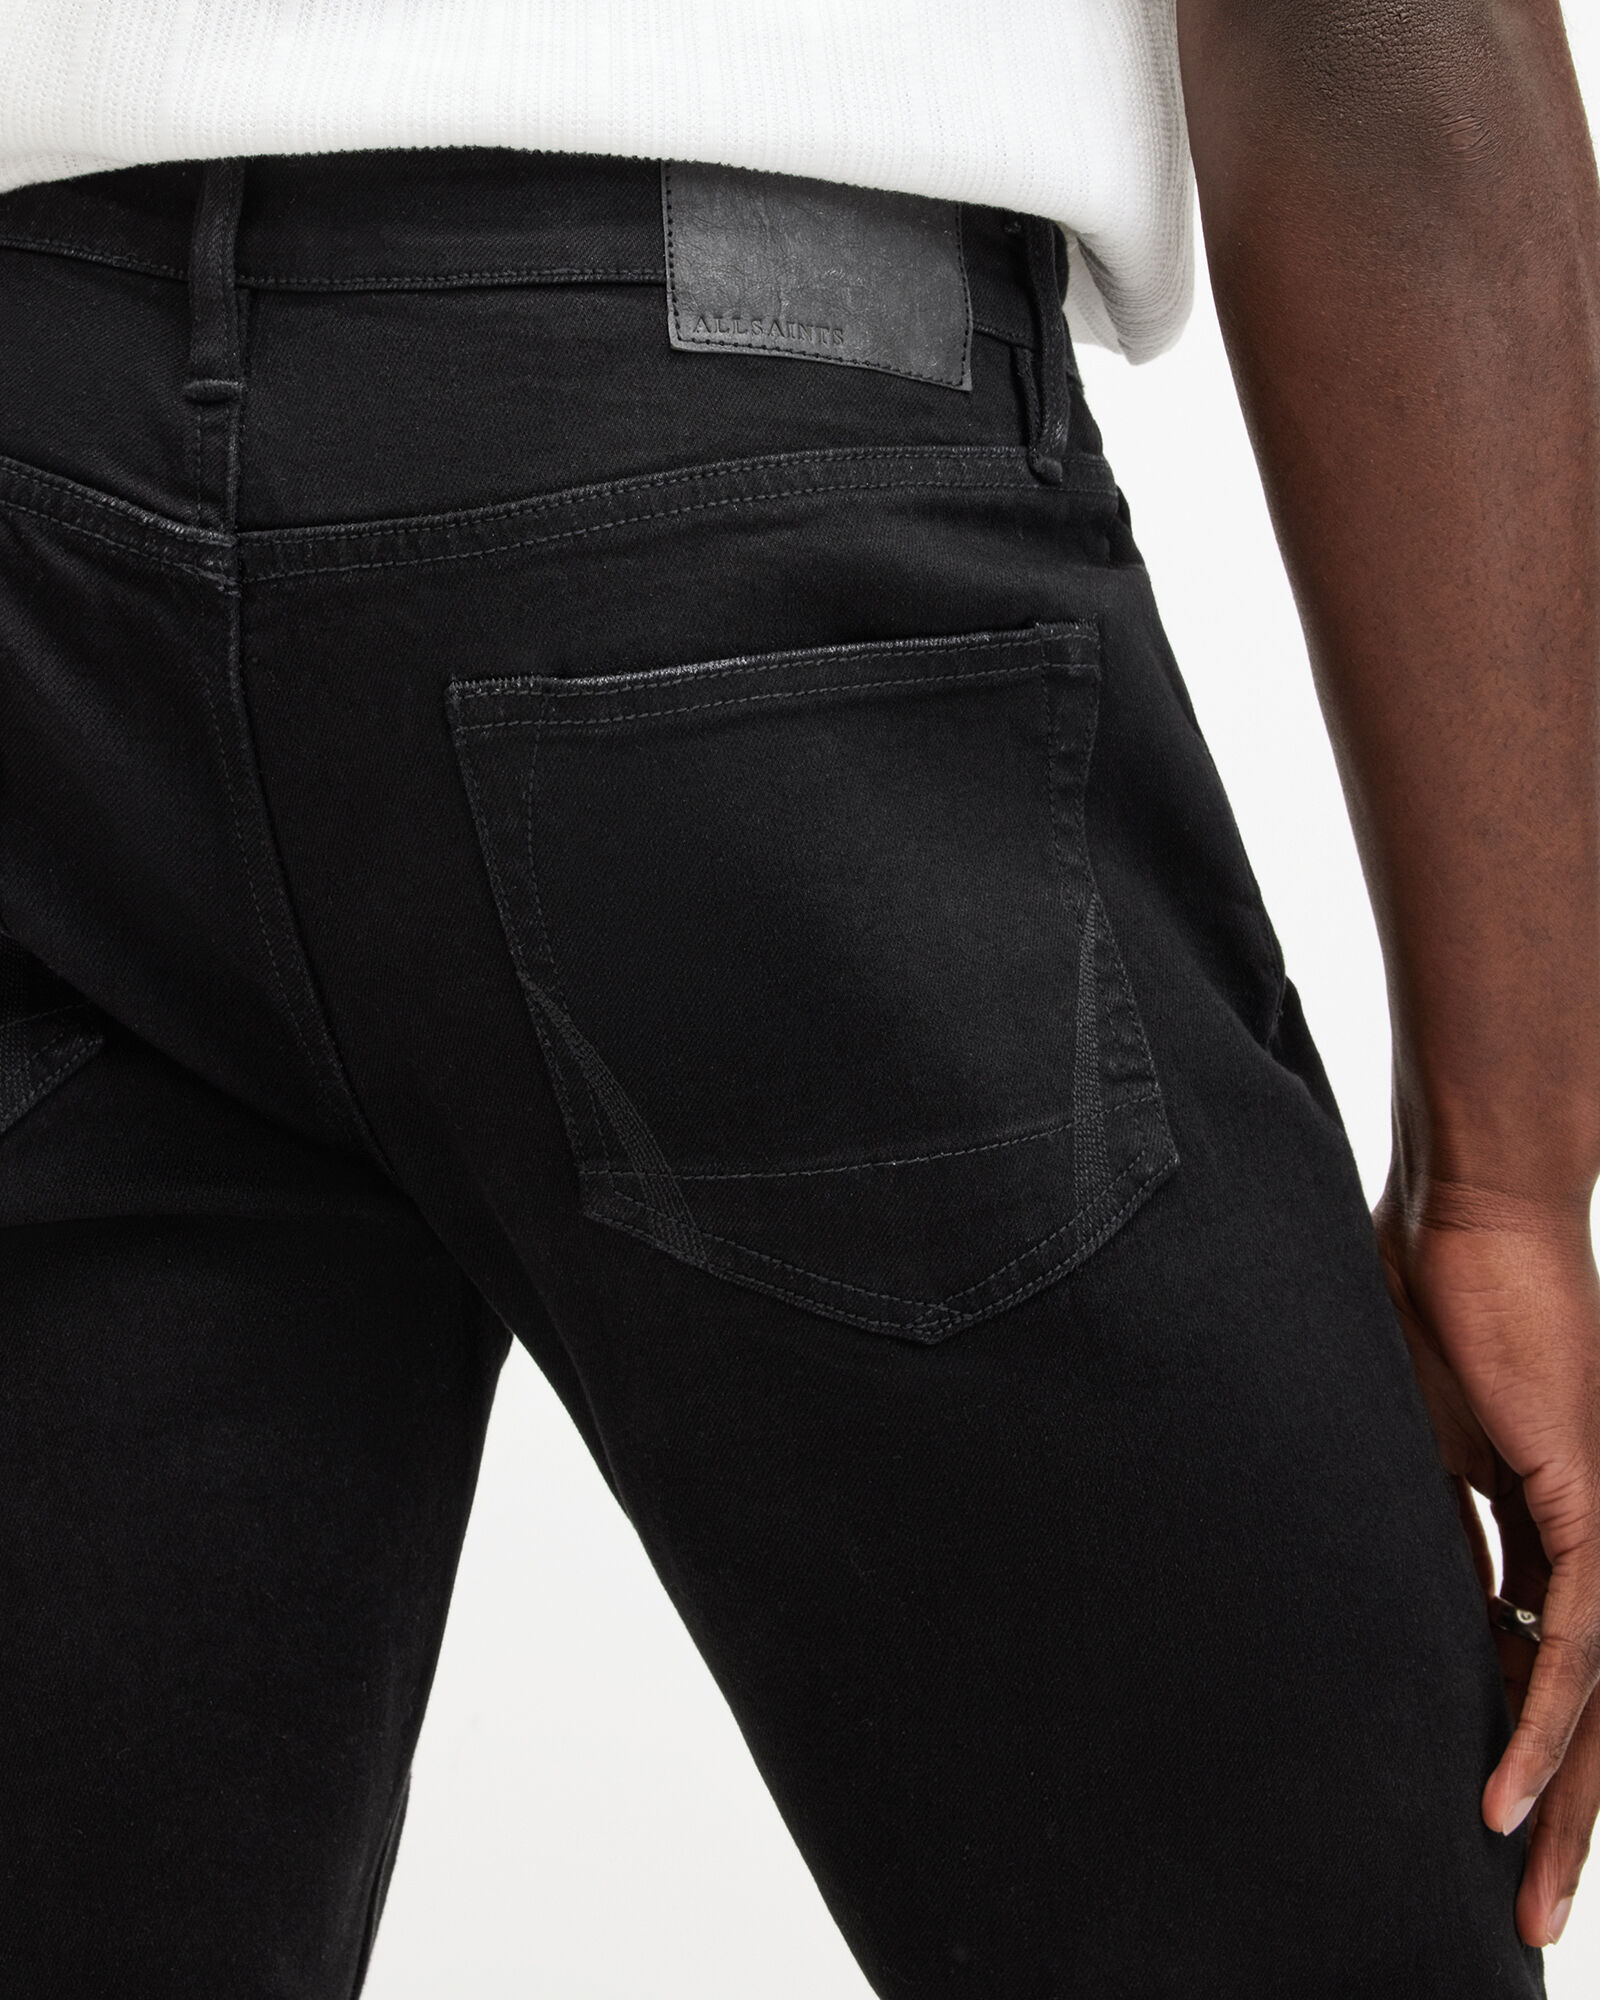 Men's Black Jeans | Buckle